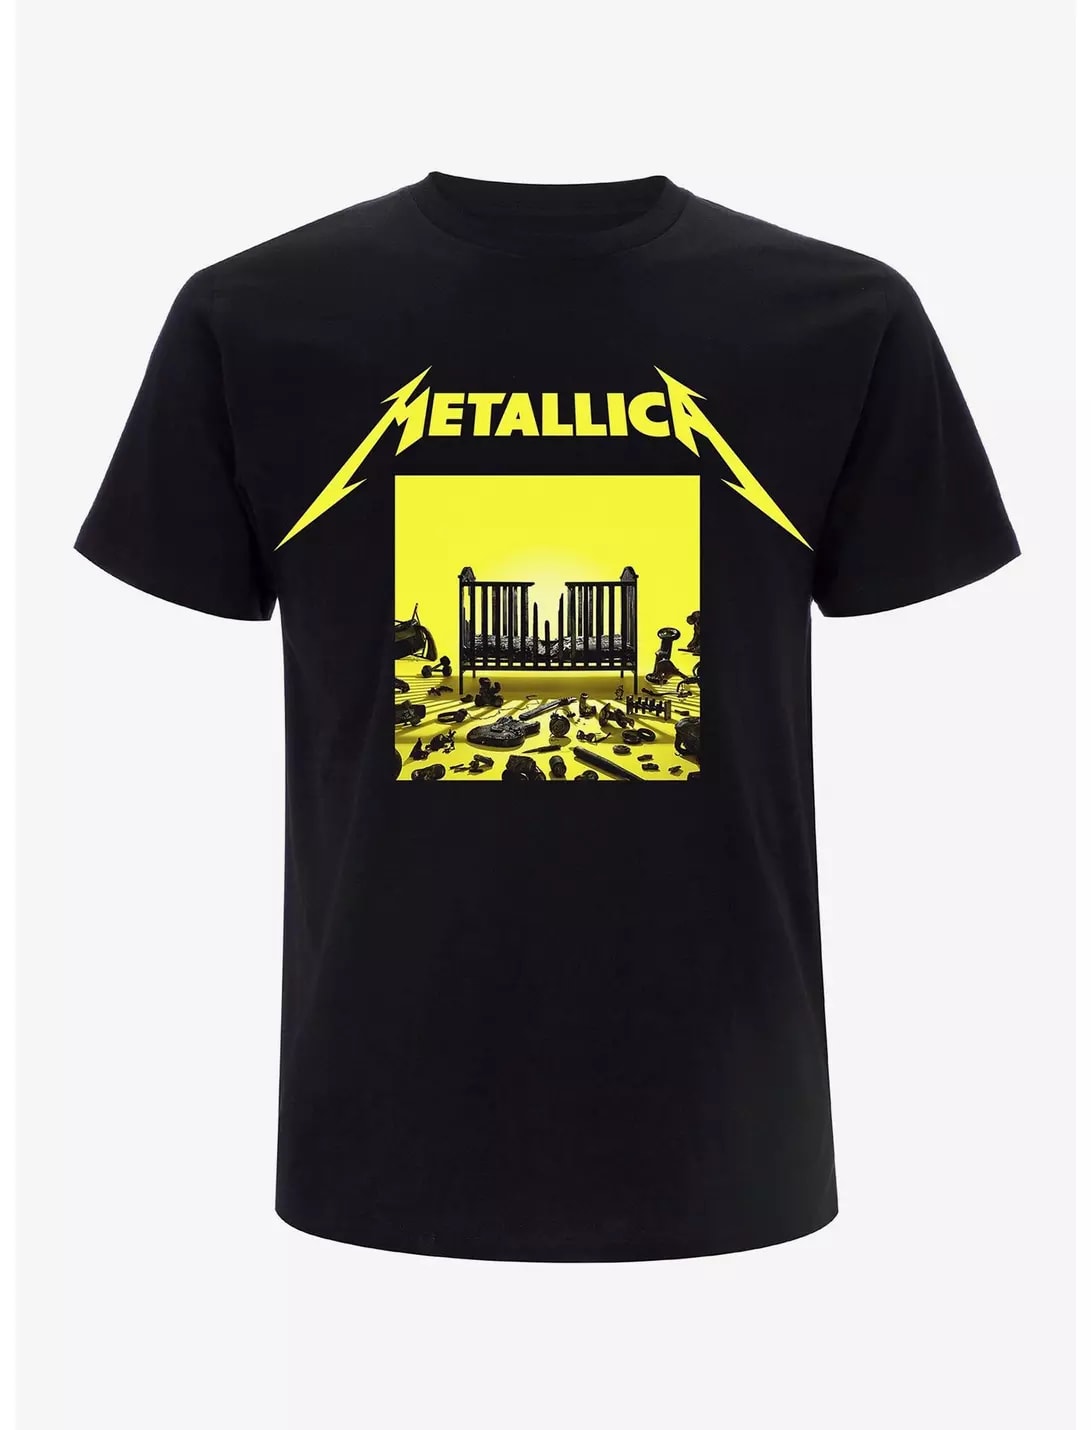 Metallica 72 Seasons Track List T Shirt Bzkuva.jpg